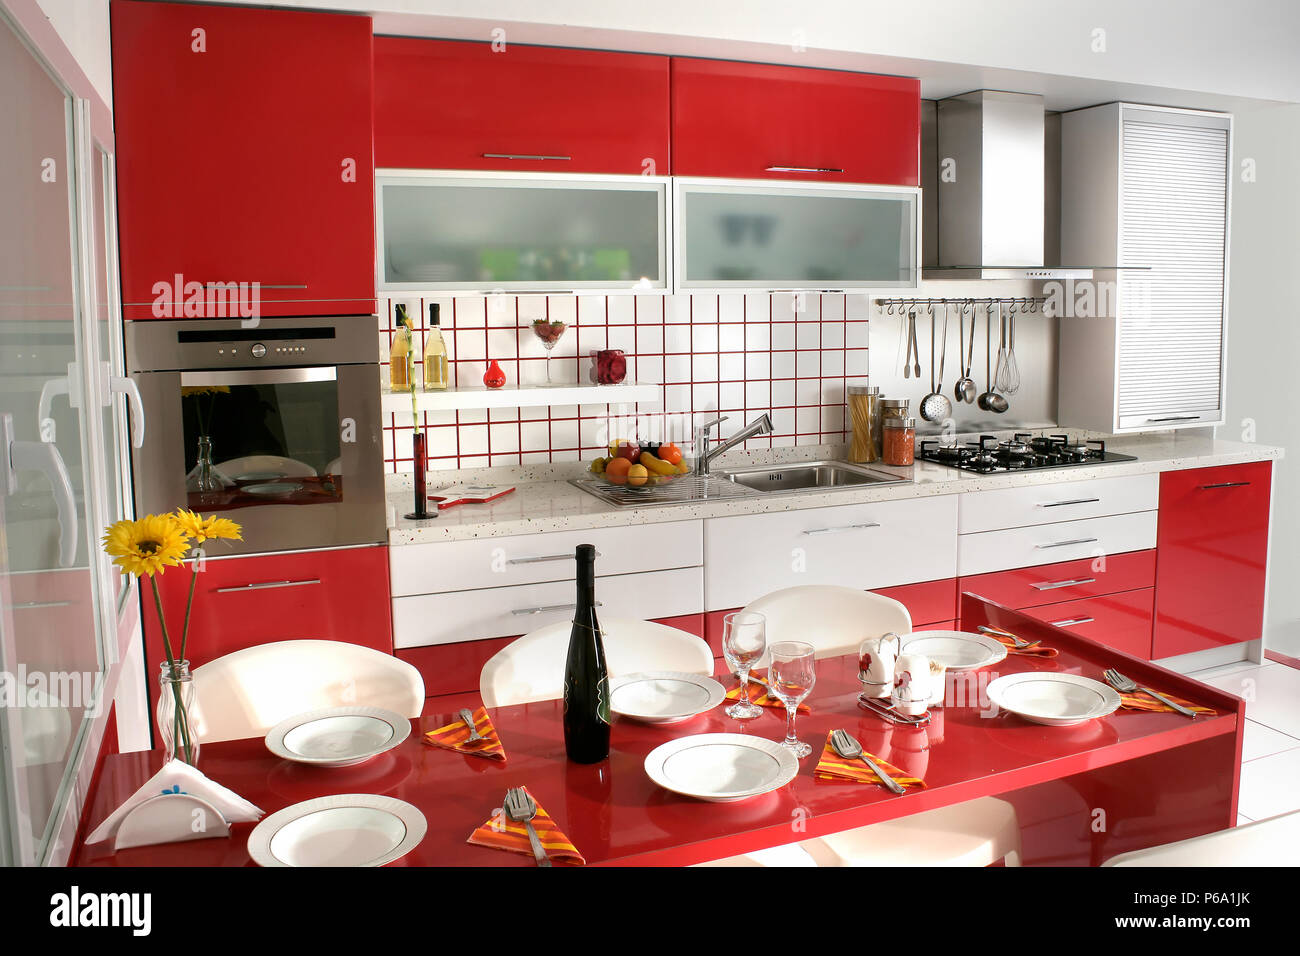 https://c8.alamy.com/comp/P6A1JK/clean-modern-red-kitchen-design-P6A1JK.jpg